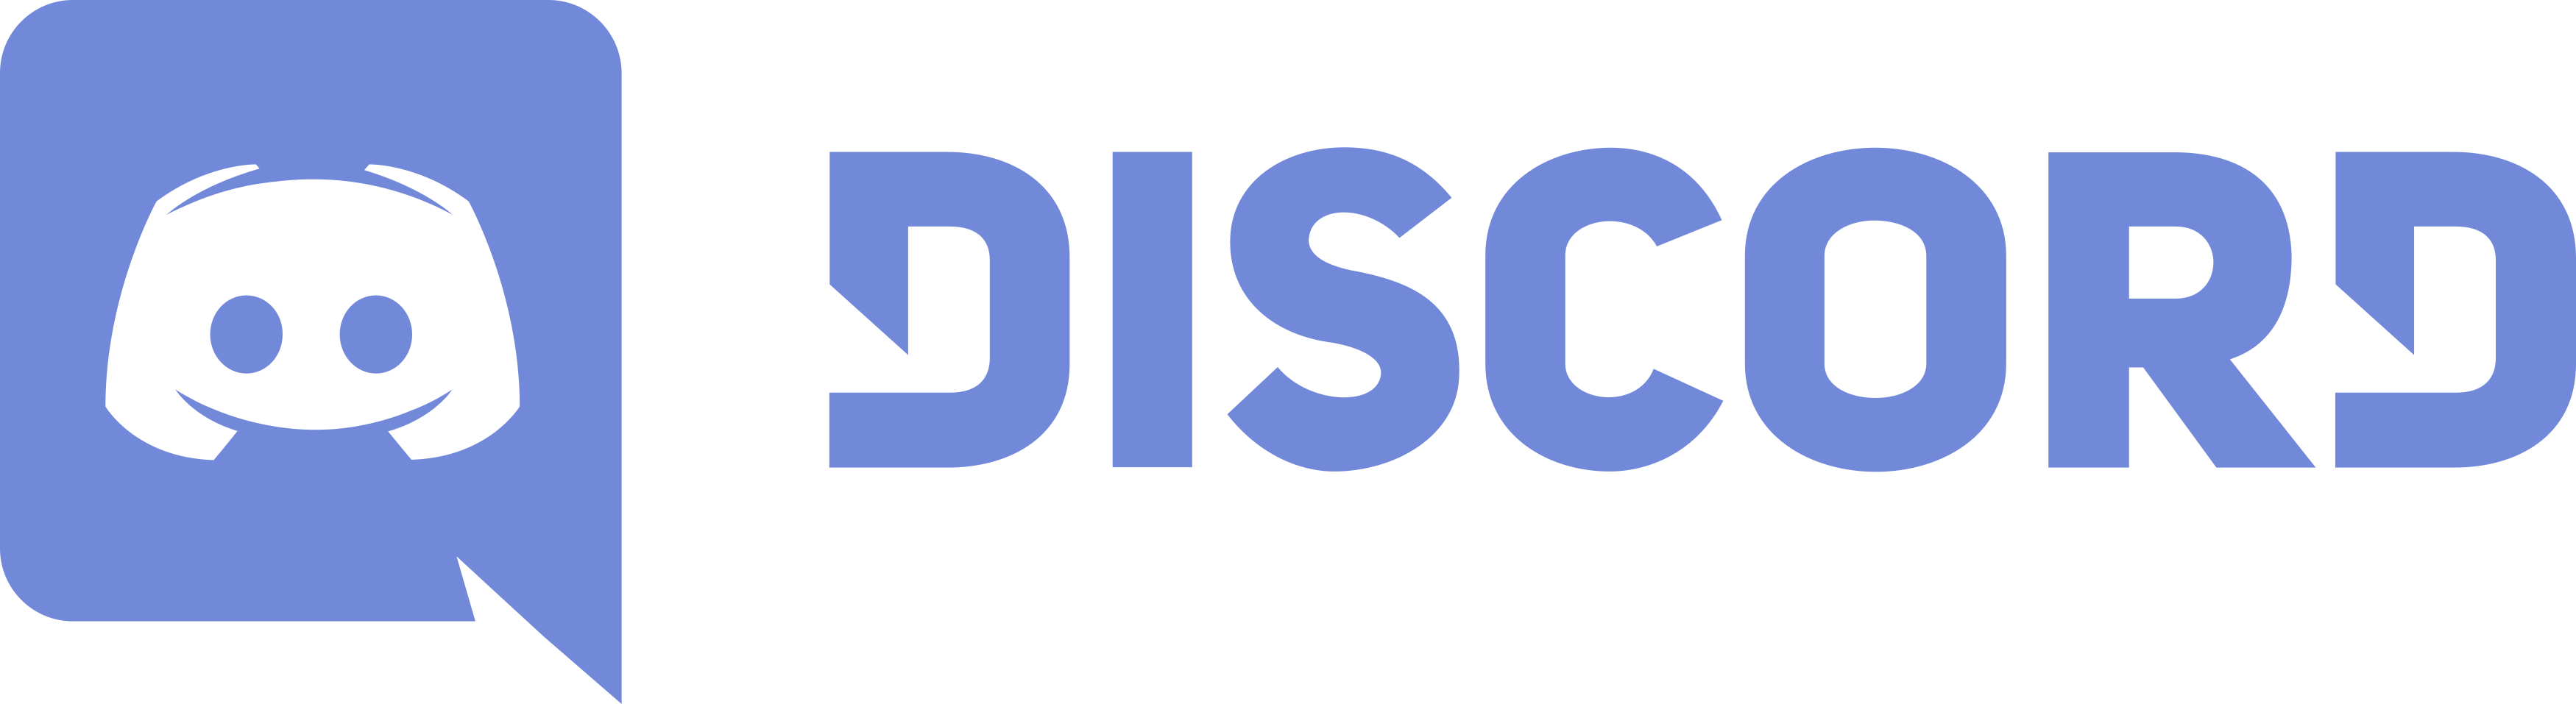 Discord Logo Blue Background PNG image